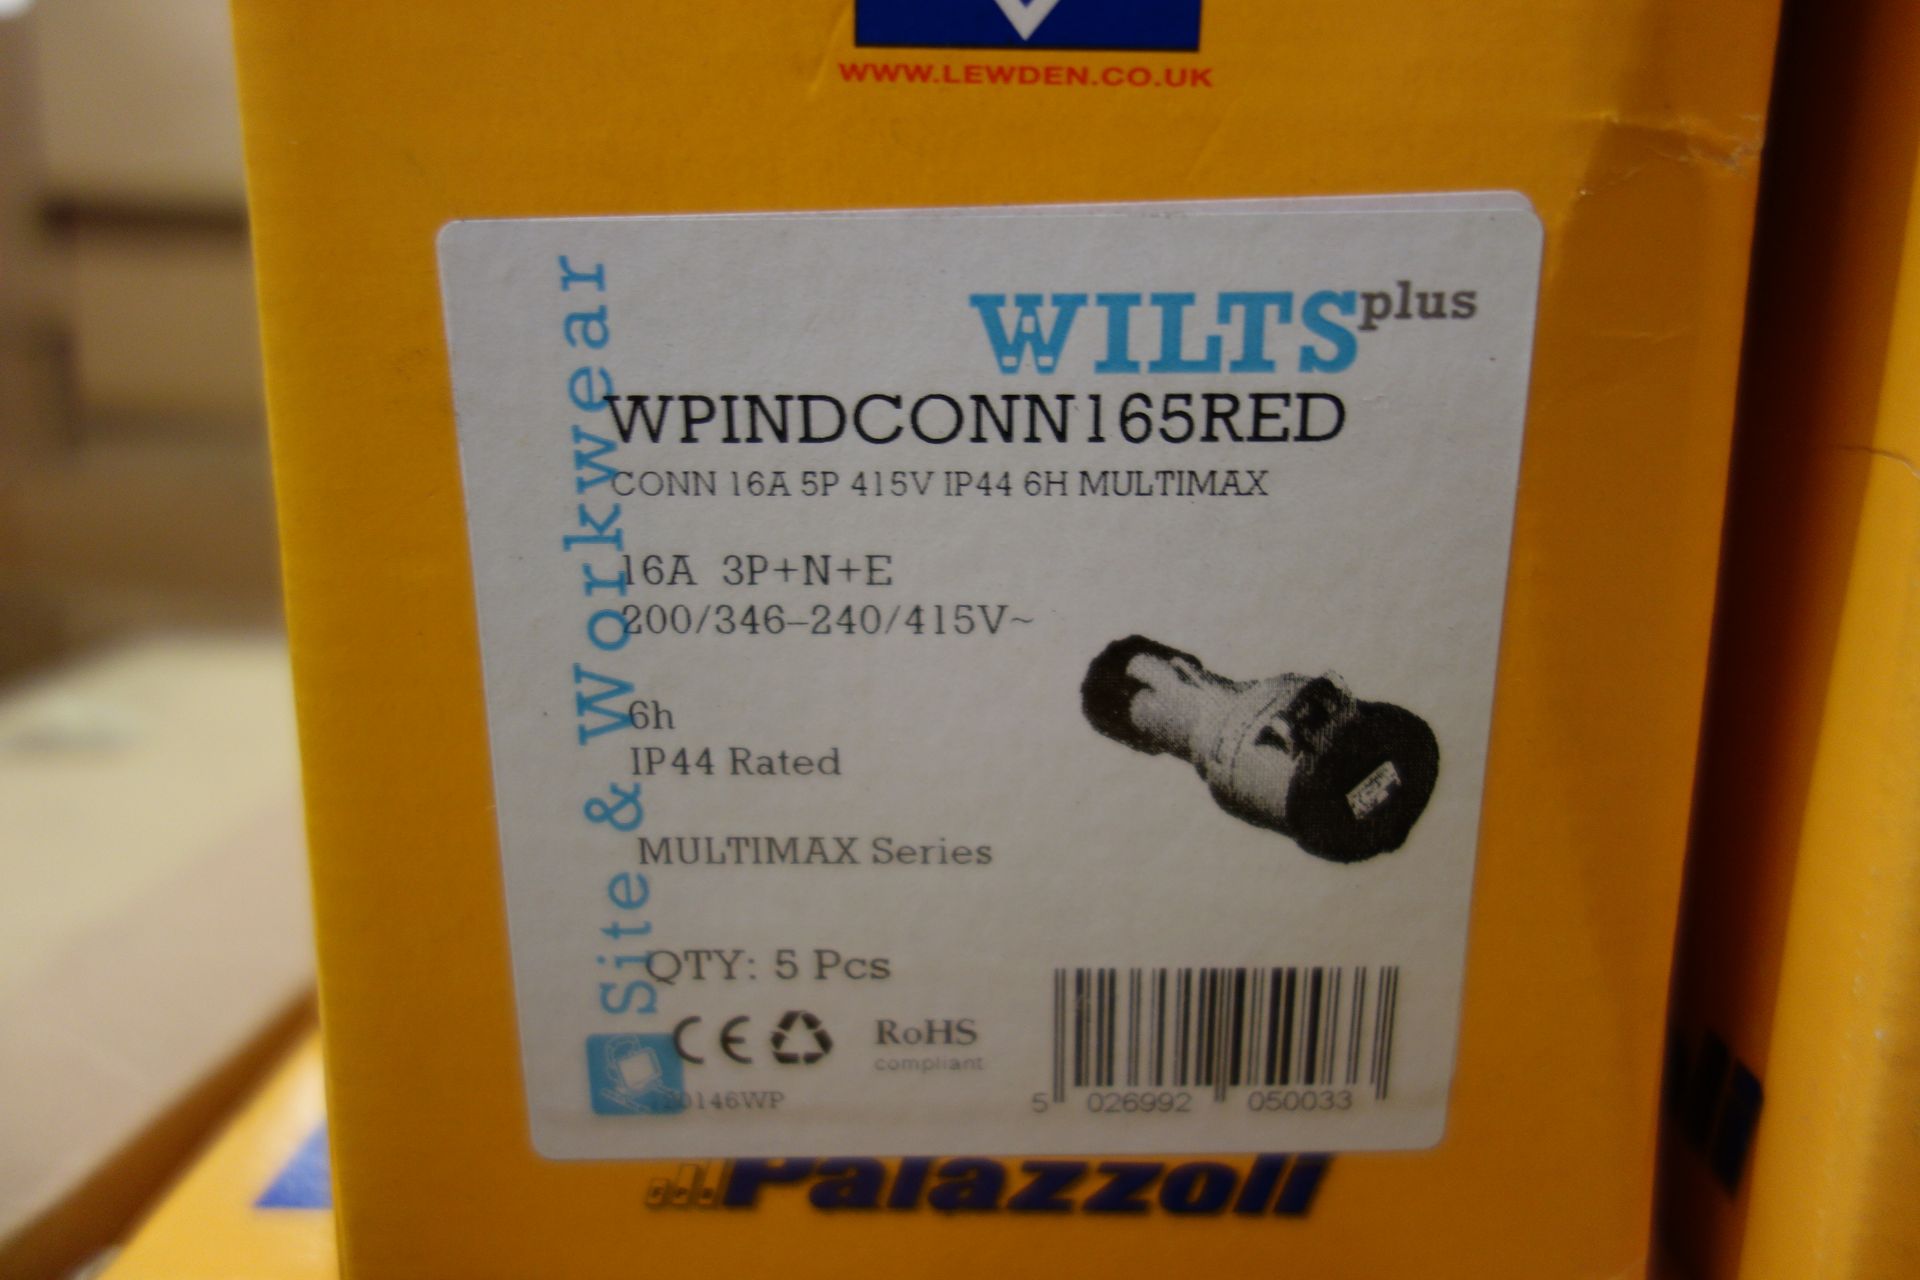 50 X Wilts WPINDCONN 165 RED CONN 16A SP 415V IP44 6H Multimax Female Socket - Image 2 of 2